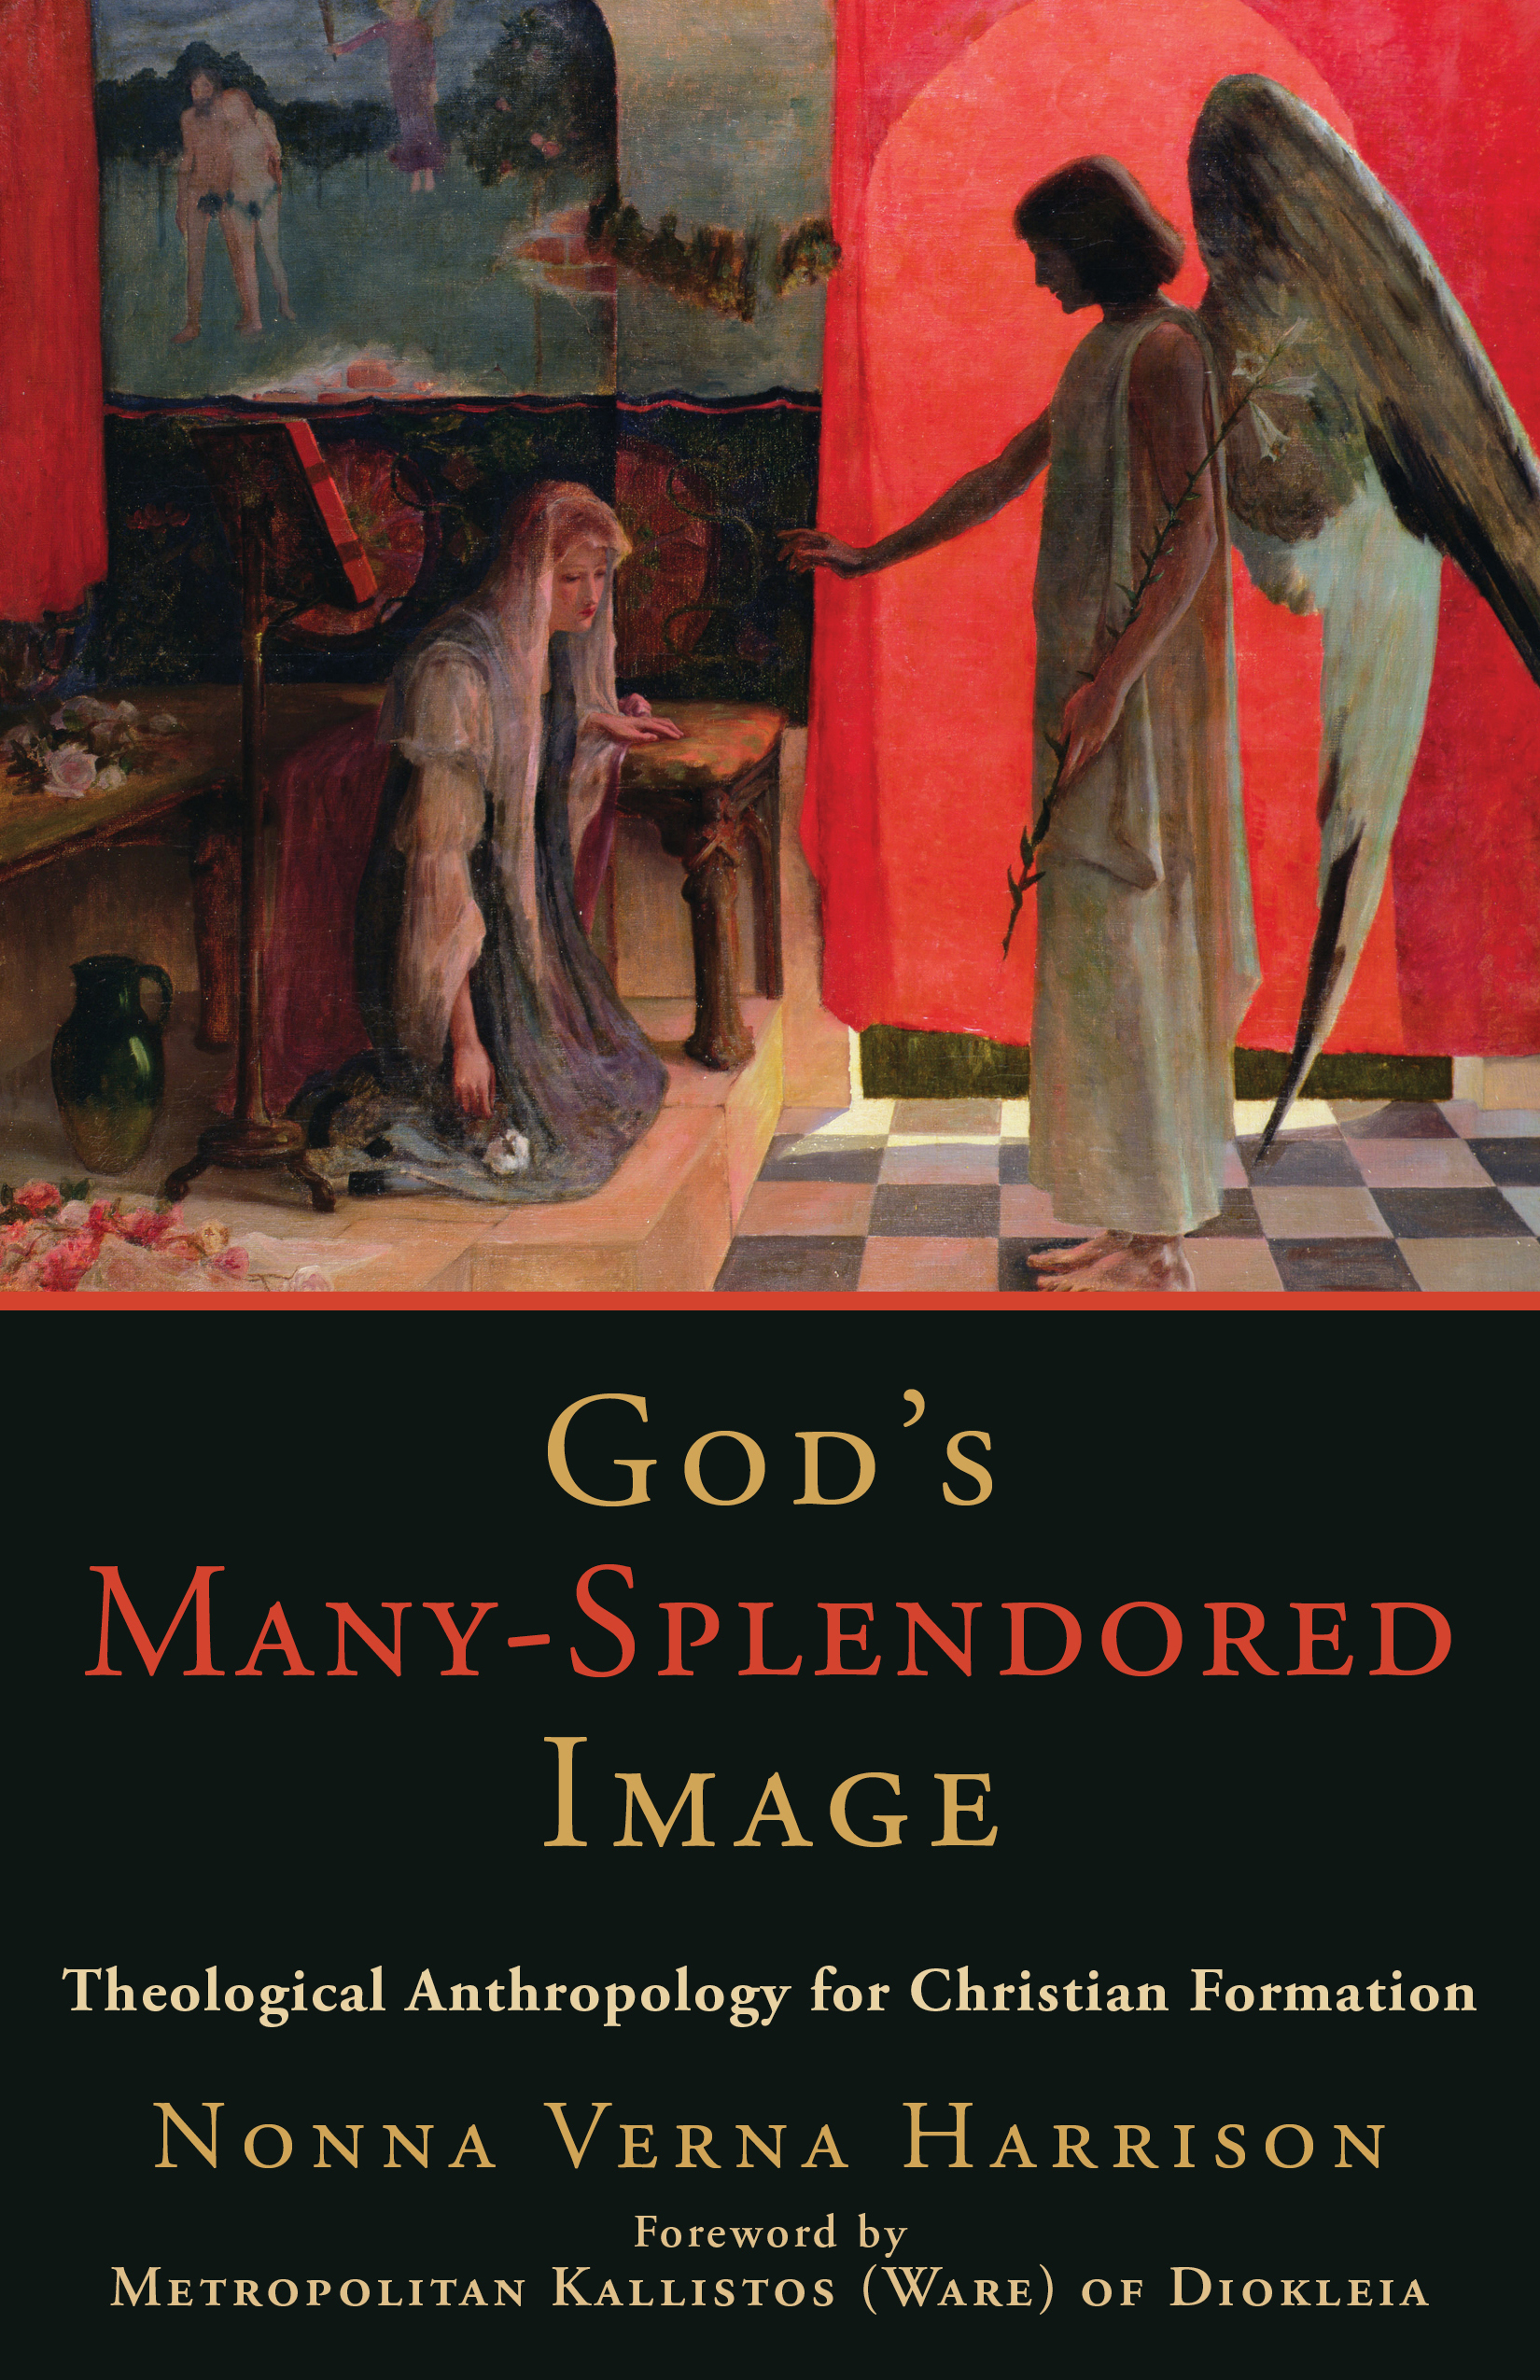 God's Many-Splendored Image - 15-24.99